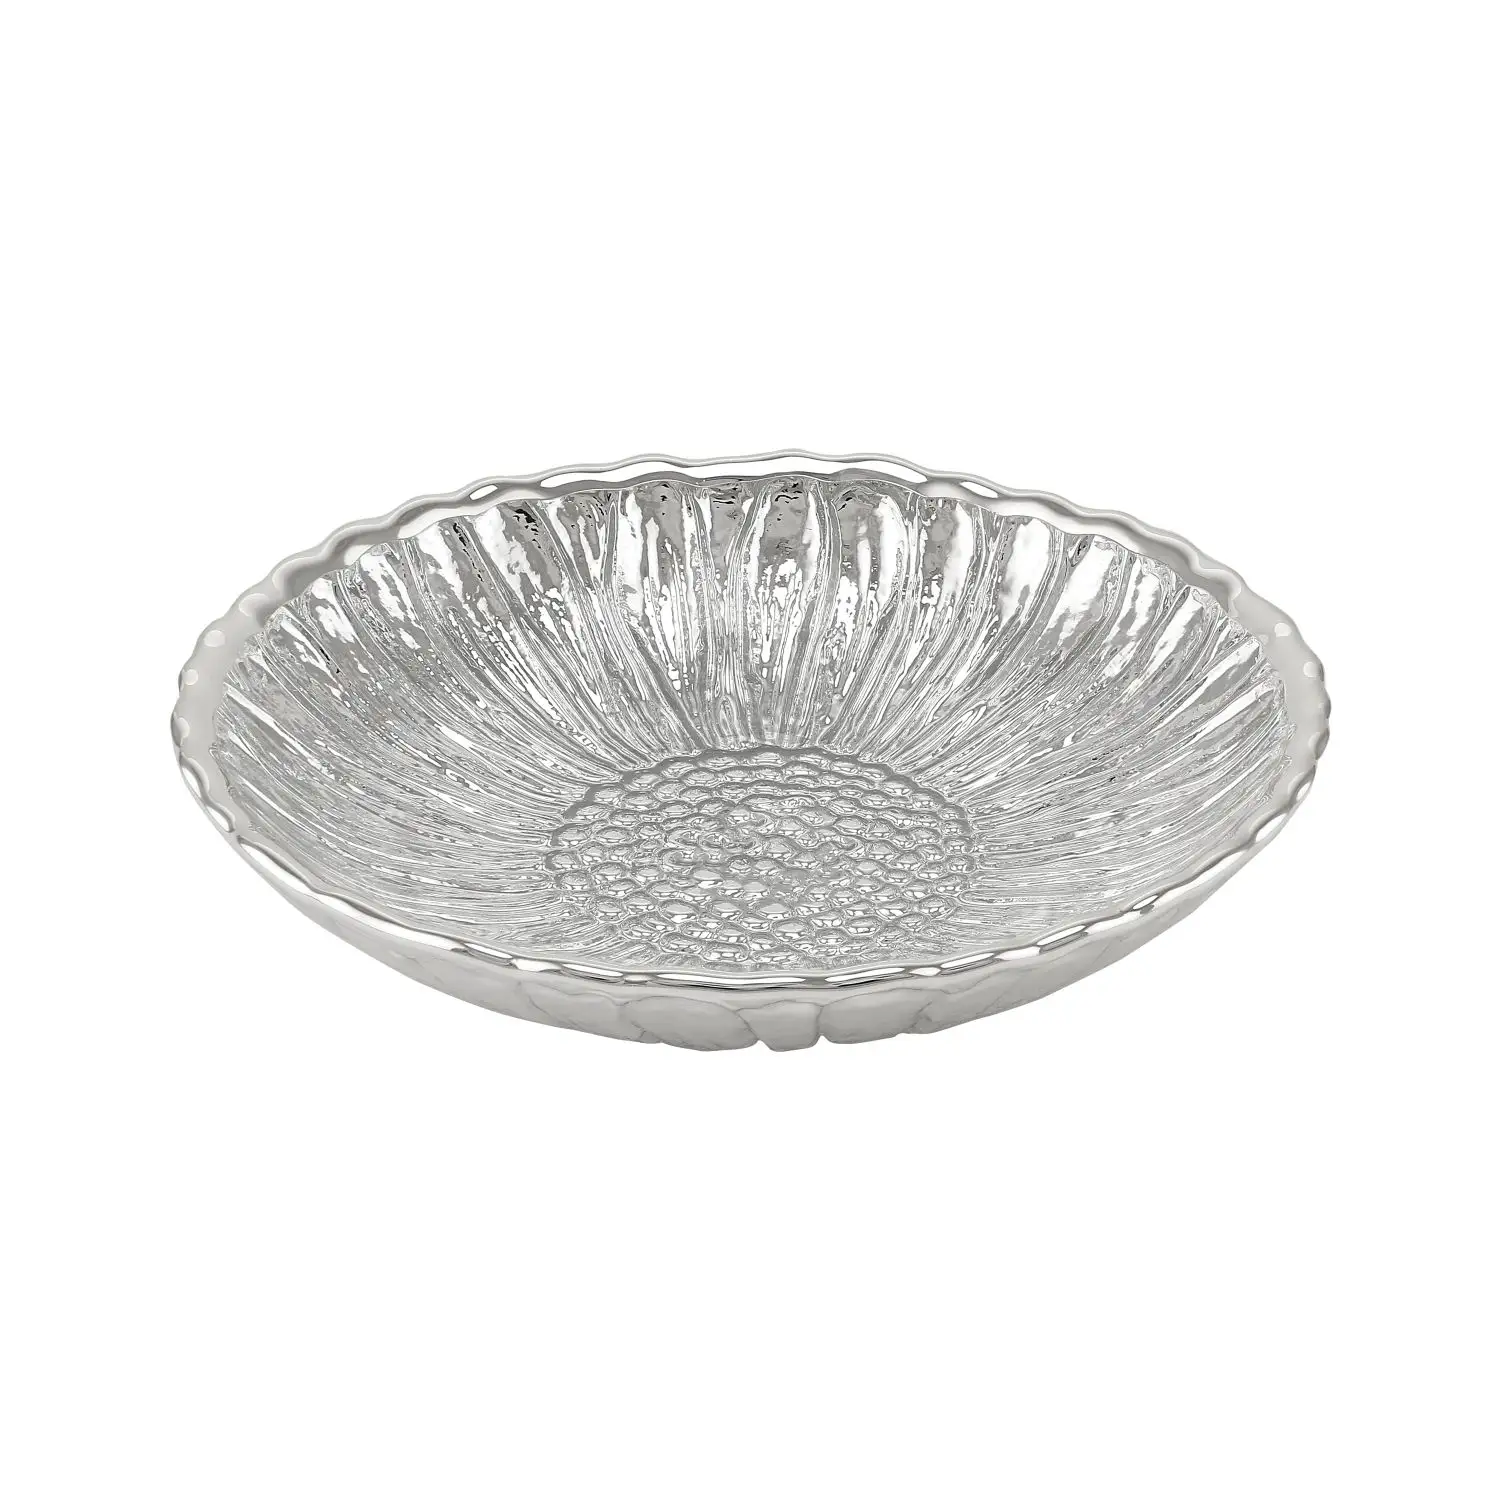 Тарелка стеклянная GIRASOLE (цвет серебрянный) диаметр 14 см тарелка стеклянная girasole цвет песочный диаметр 14 см